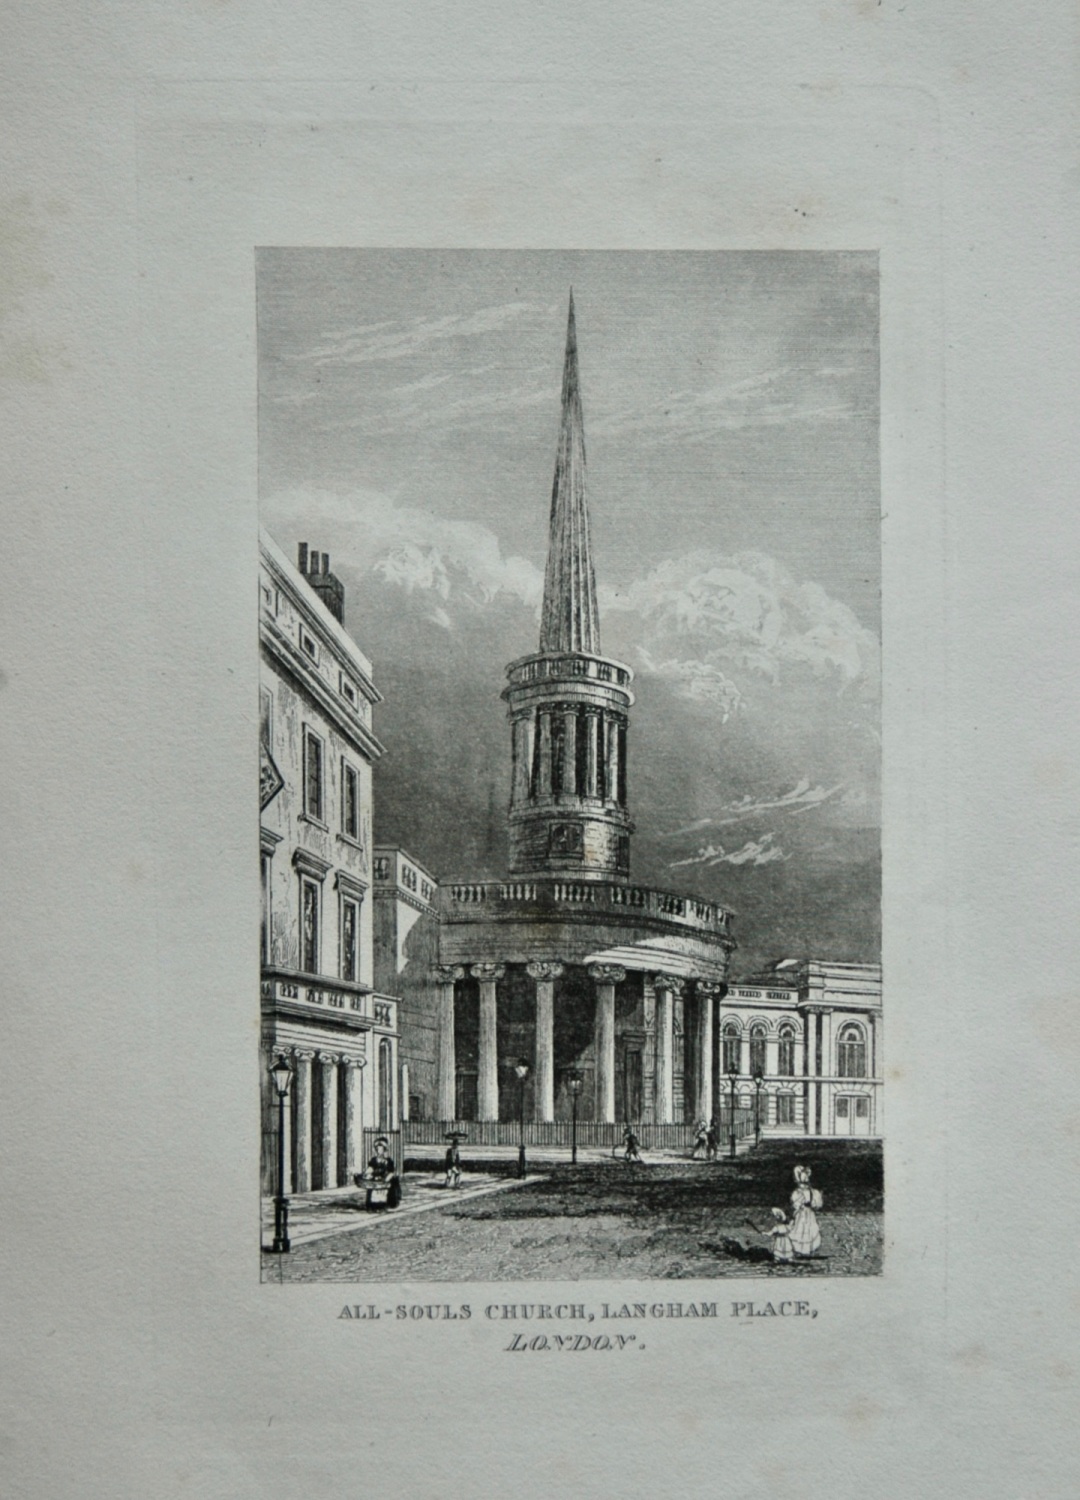 All-Souls Church, Langham Place, London.  1845.